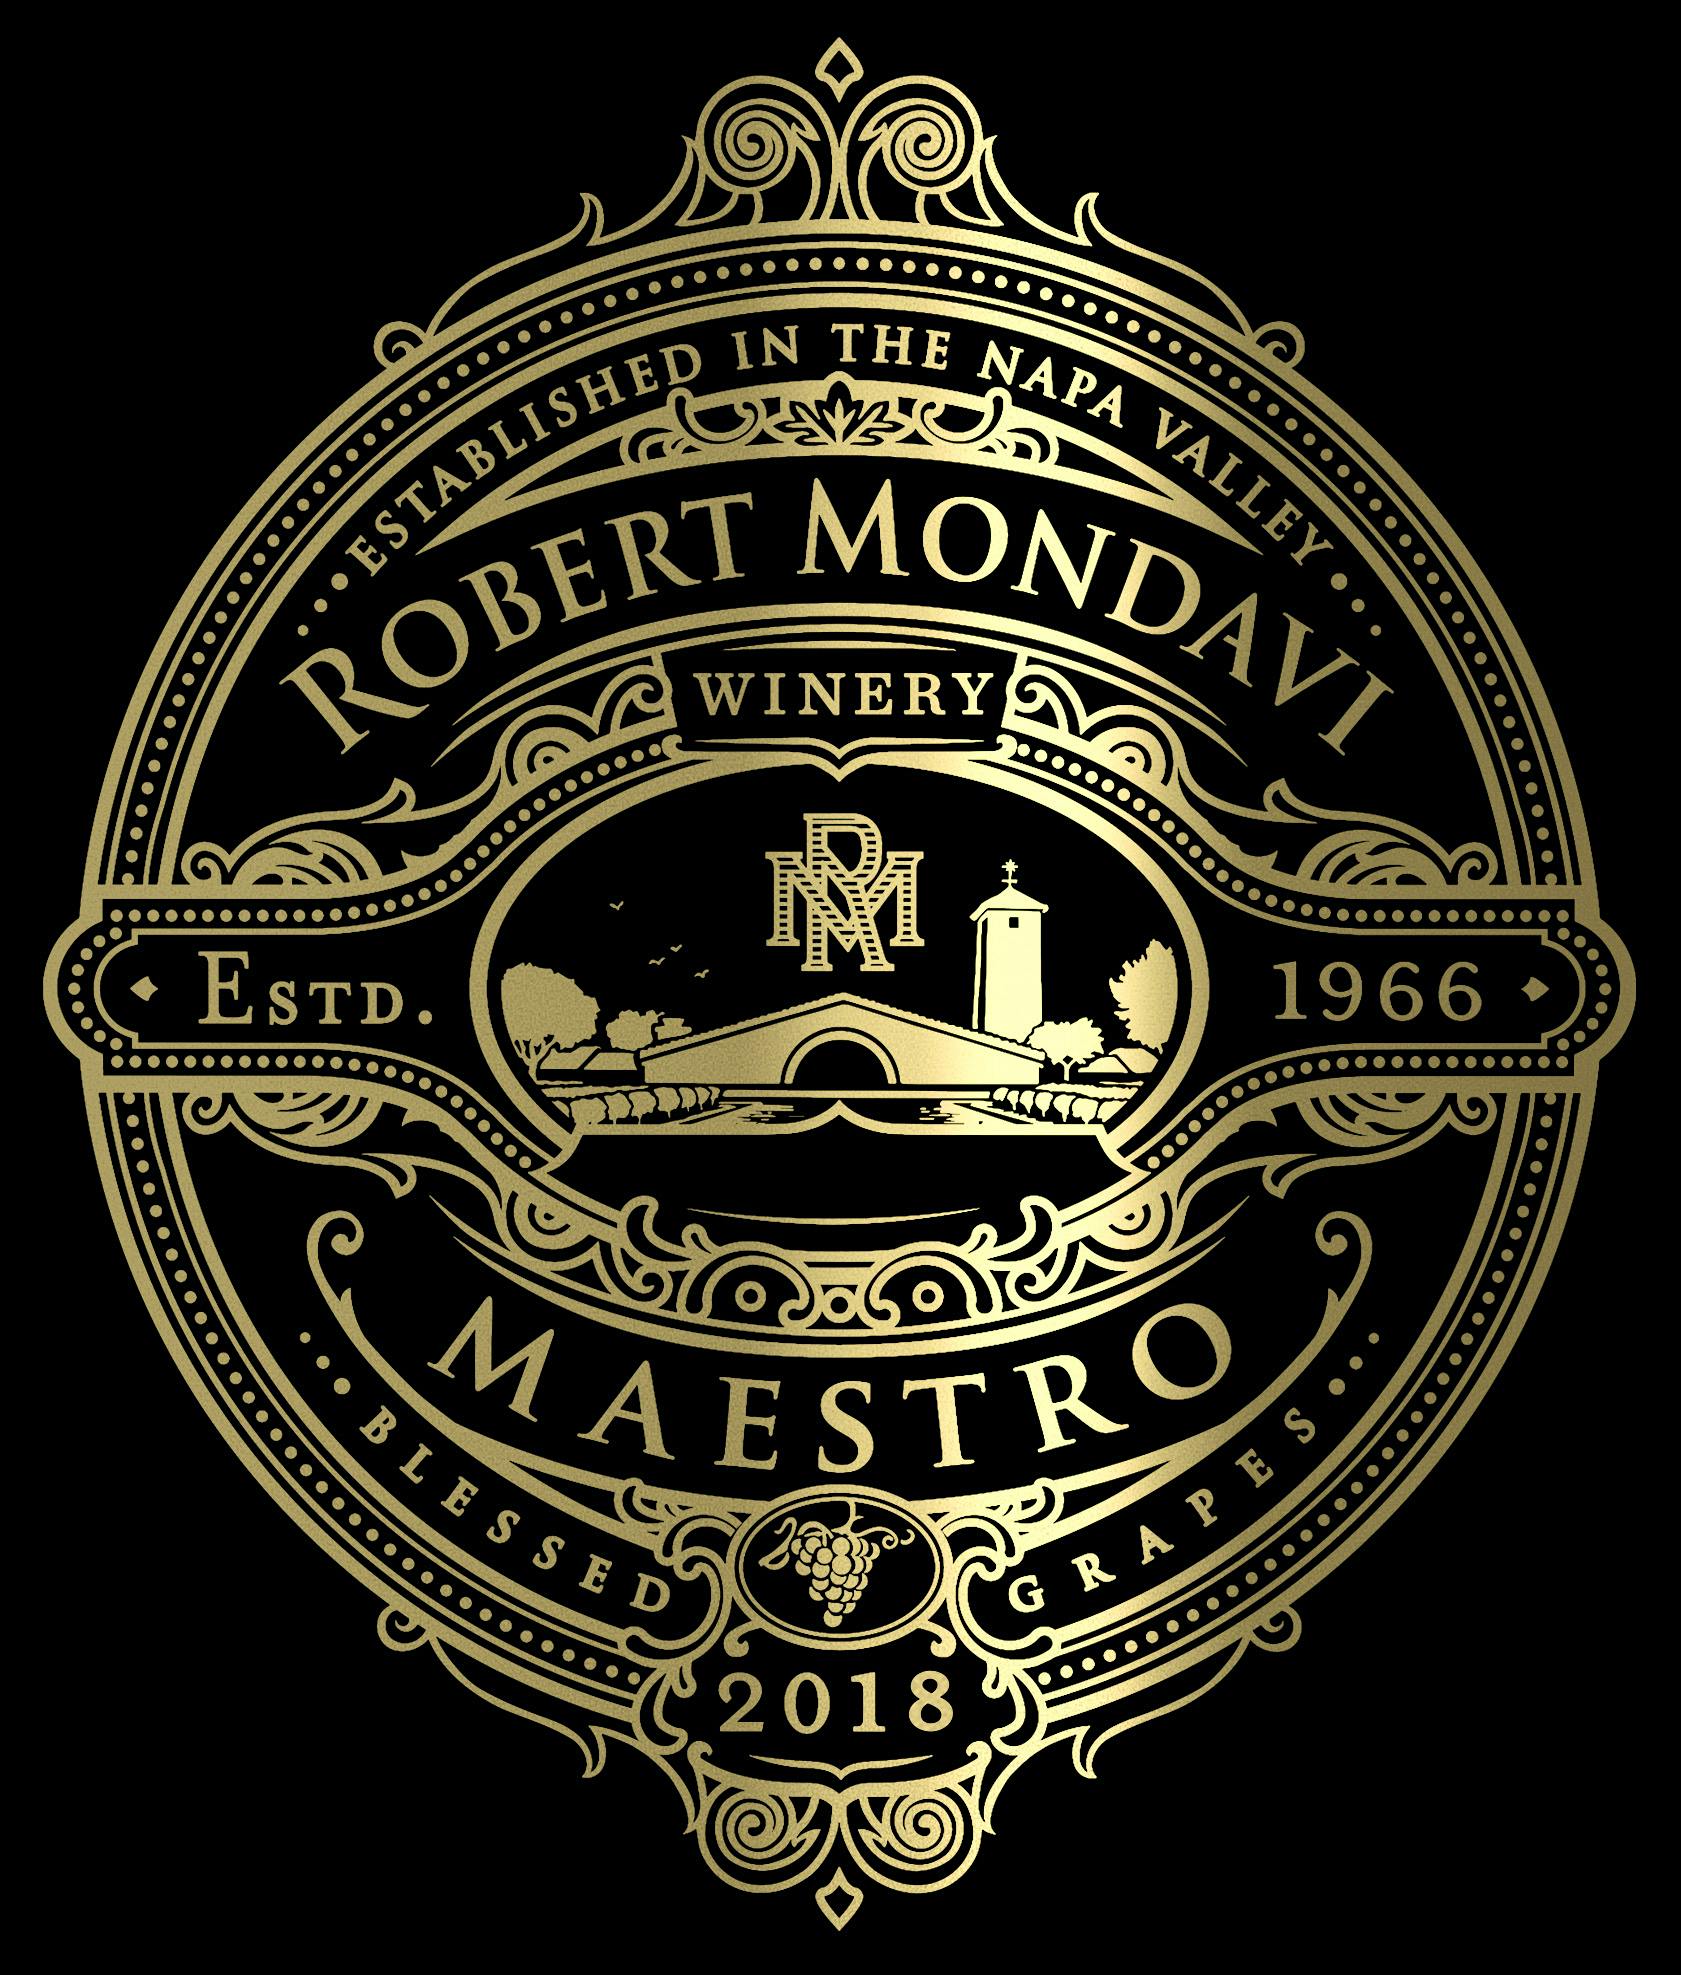 Label for Robert Mondavi